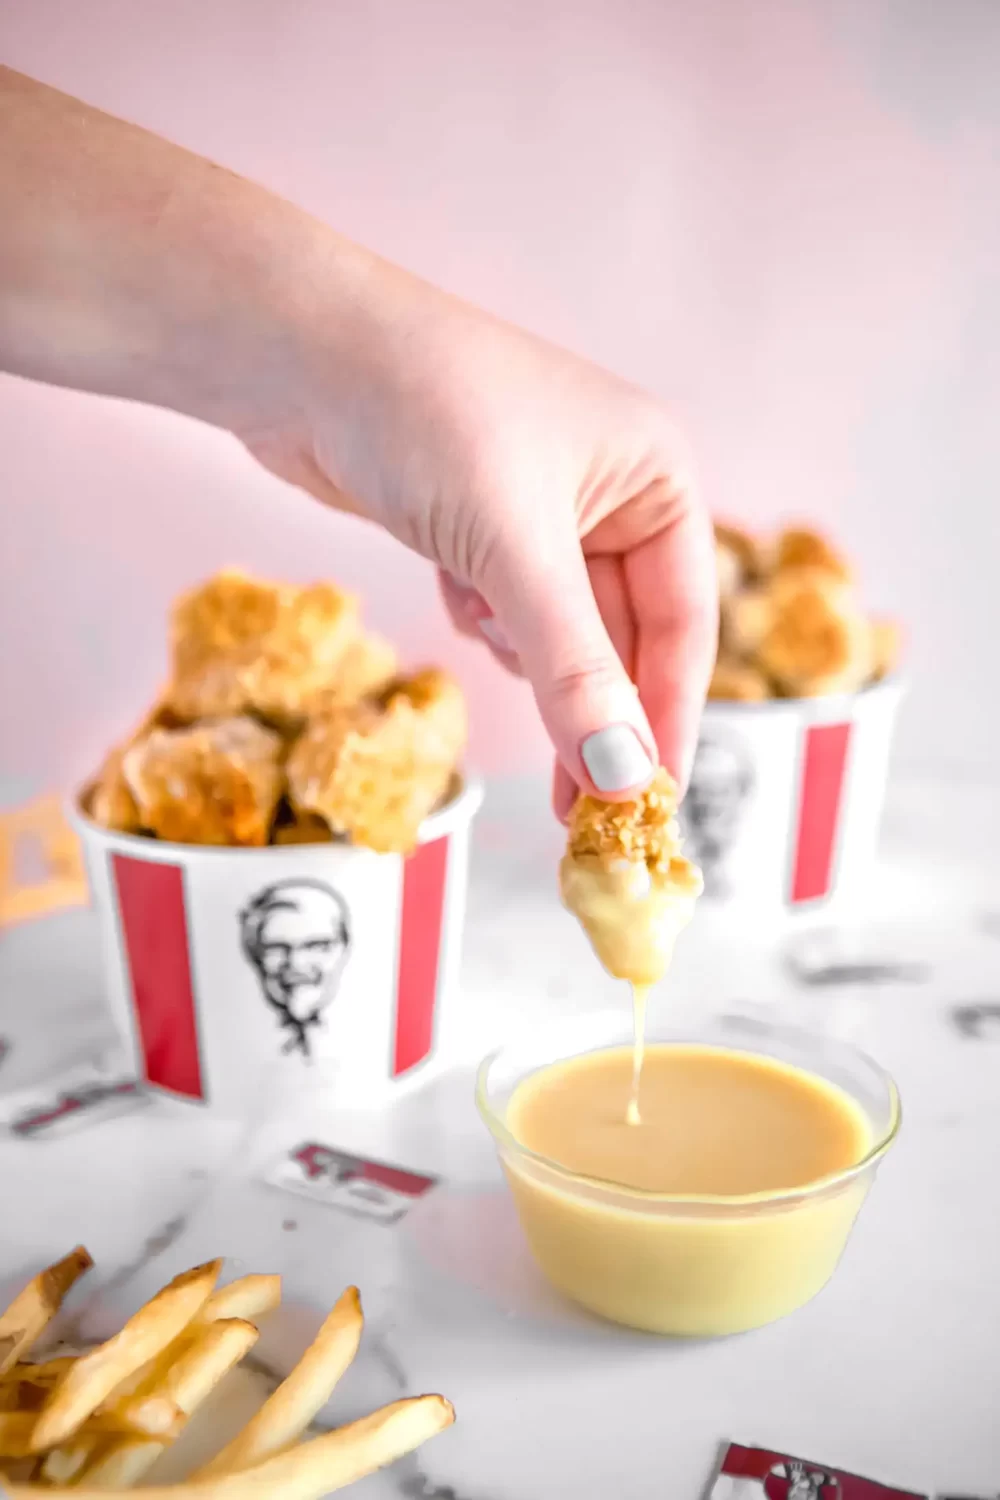 kfc style popcorn chicken with honey mustard dipping sauce